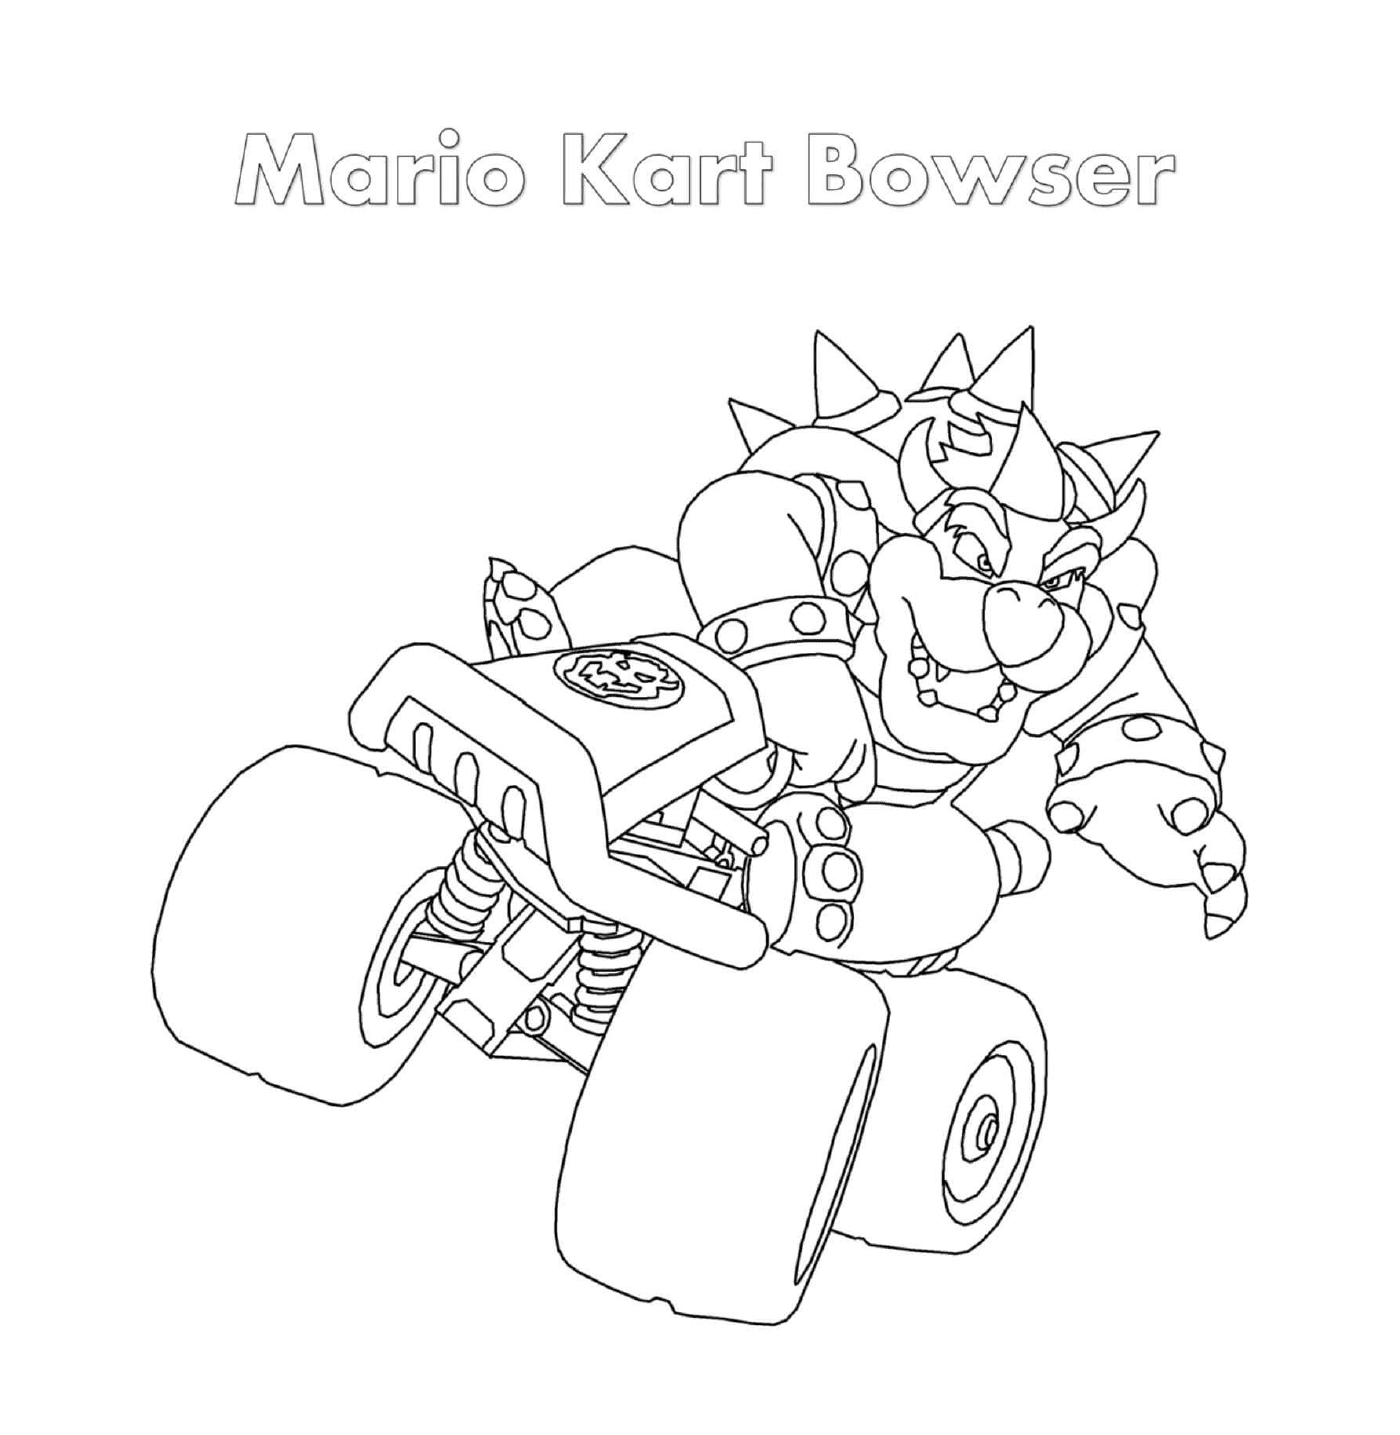  Mario Kart em Mario Kart 